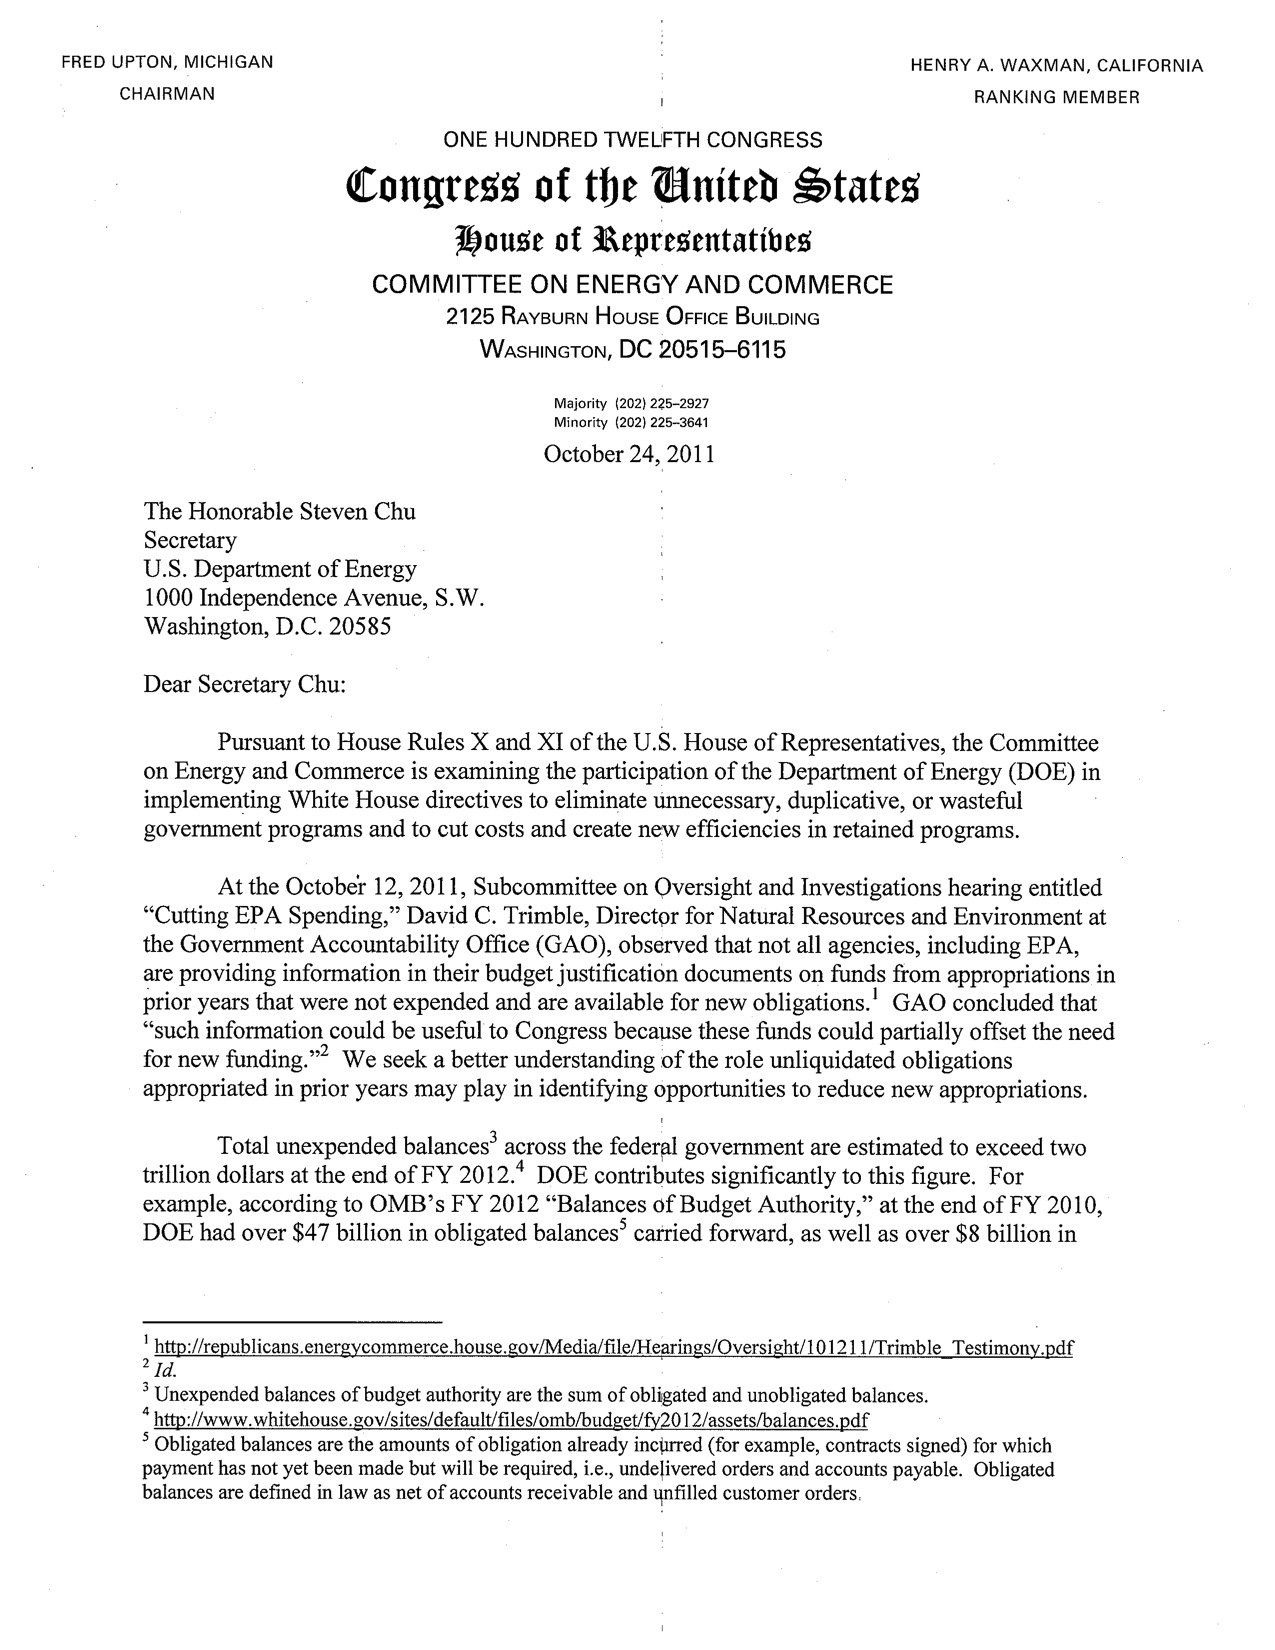 Letter to Secretary Steven Chu, U.S. Department of Energy  U.S.